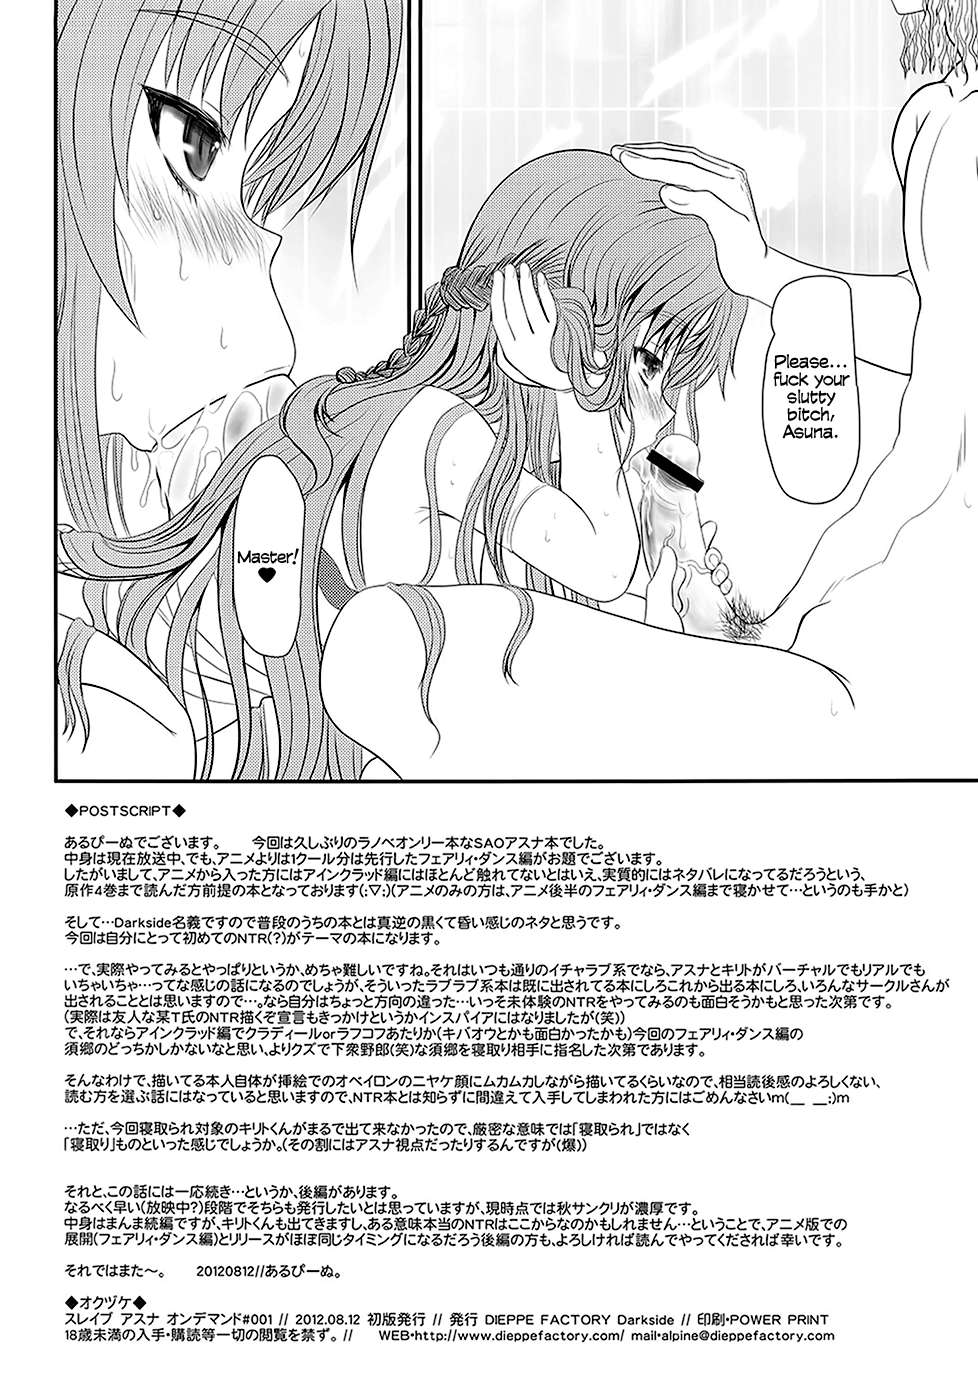 Hentai Manga Comic-Slave Asuna Online-Chapter 1-33